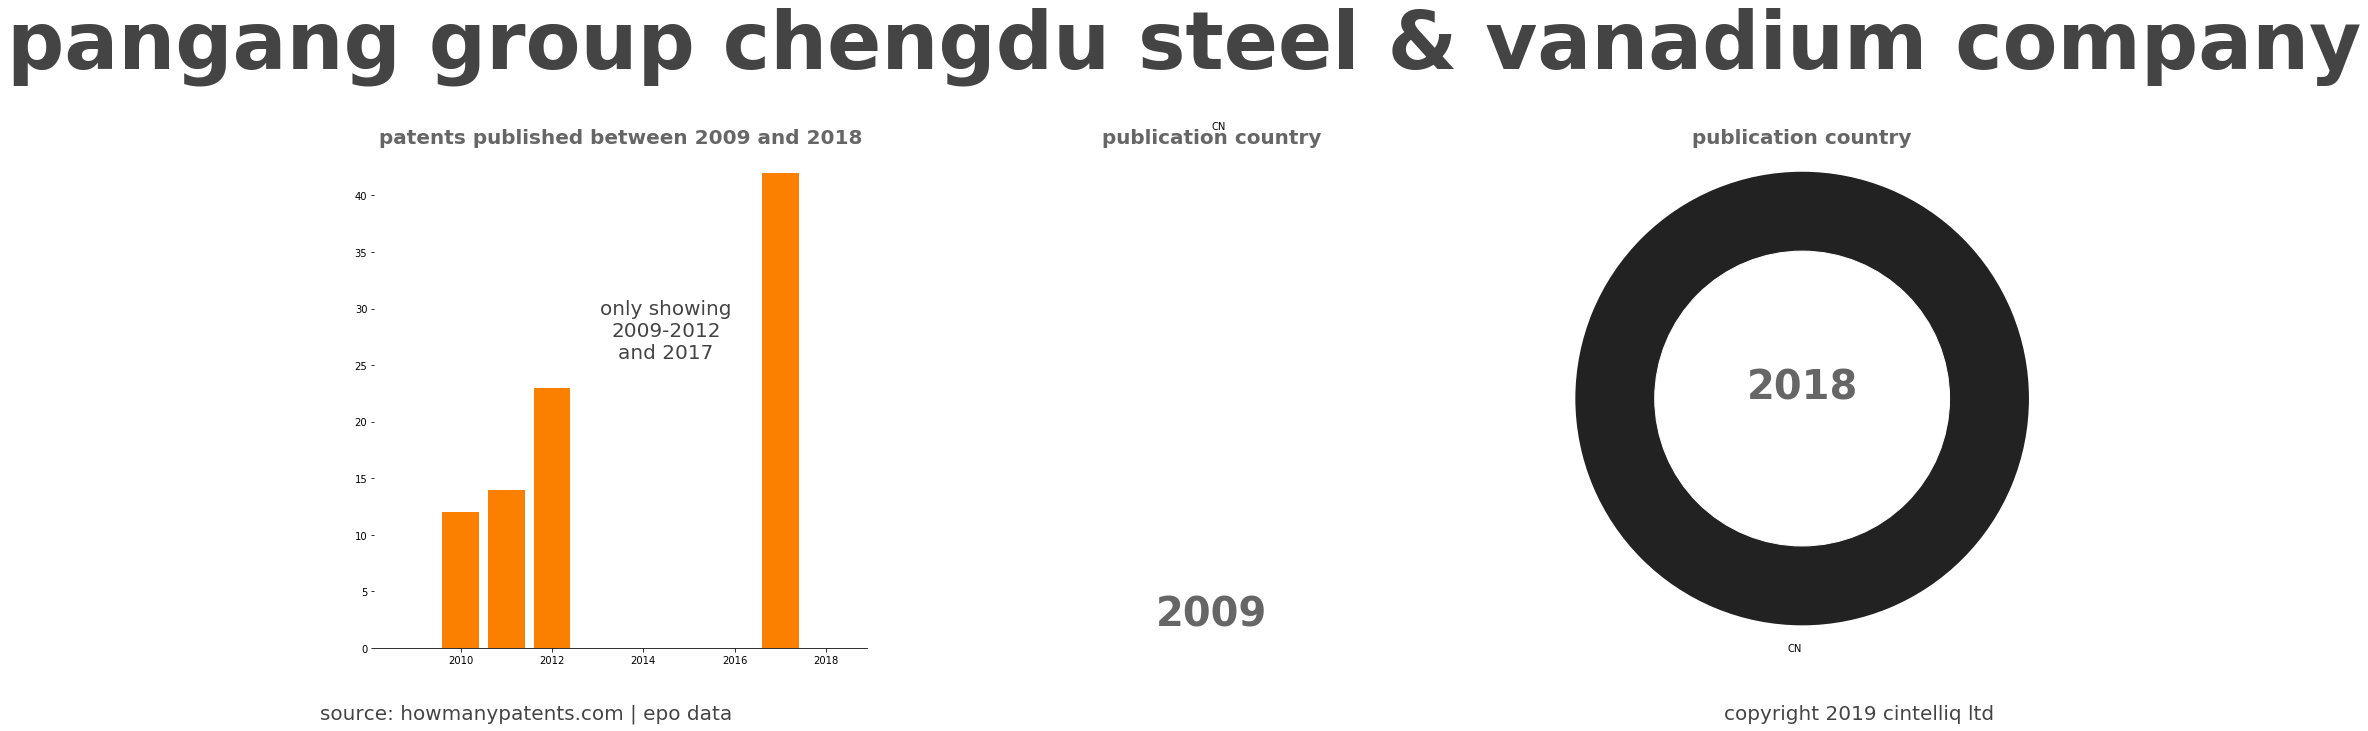 summary of patents for Pangang Group Chengdu Steel & Vanadium Company